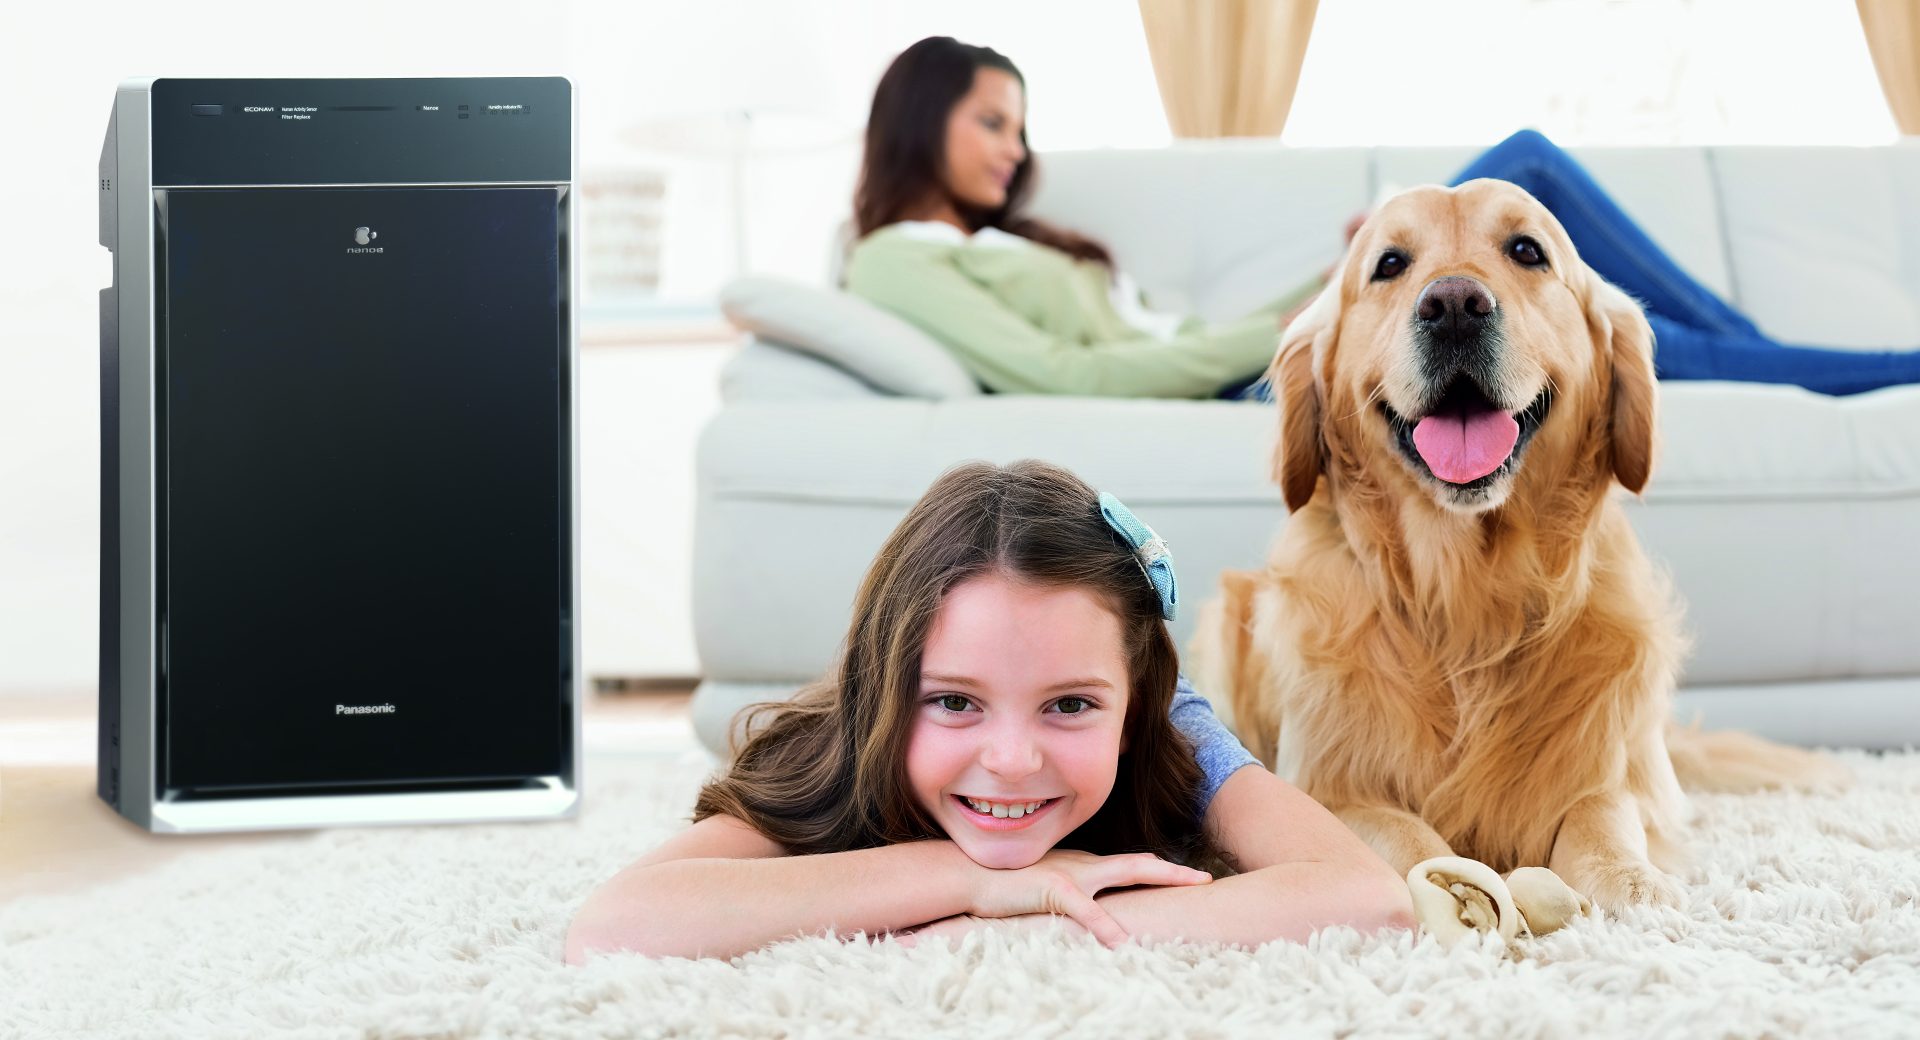 Panasonic F-VXR70G-K PAPEU Air Purifier 19 Img Lifestyle F VXR70G black LivingRoom Child Dog CMYK 80cm FINAL